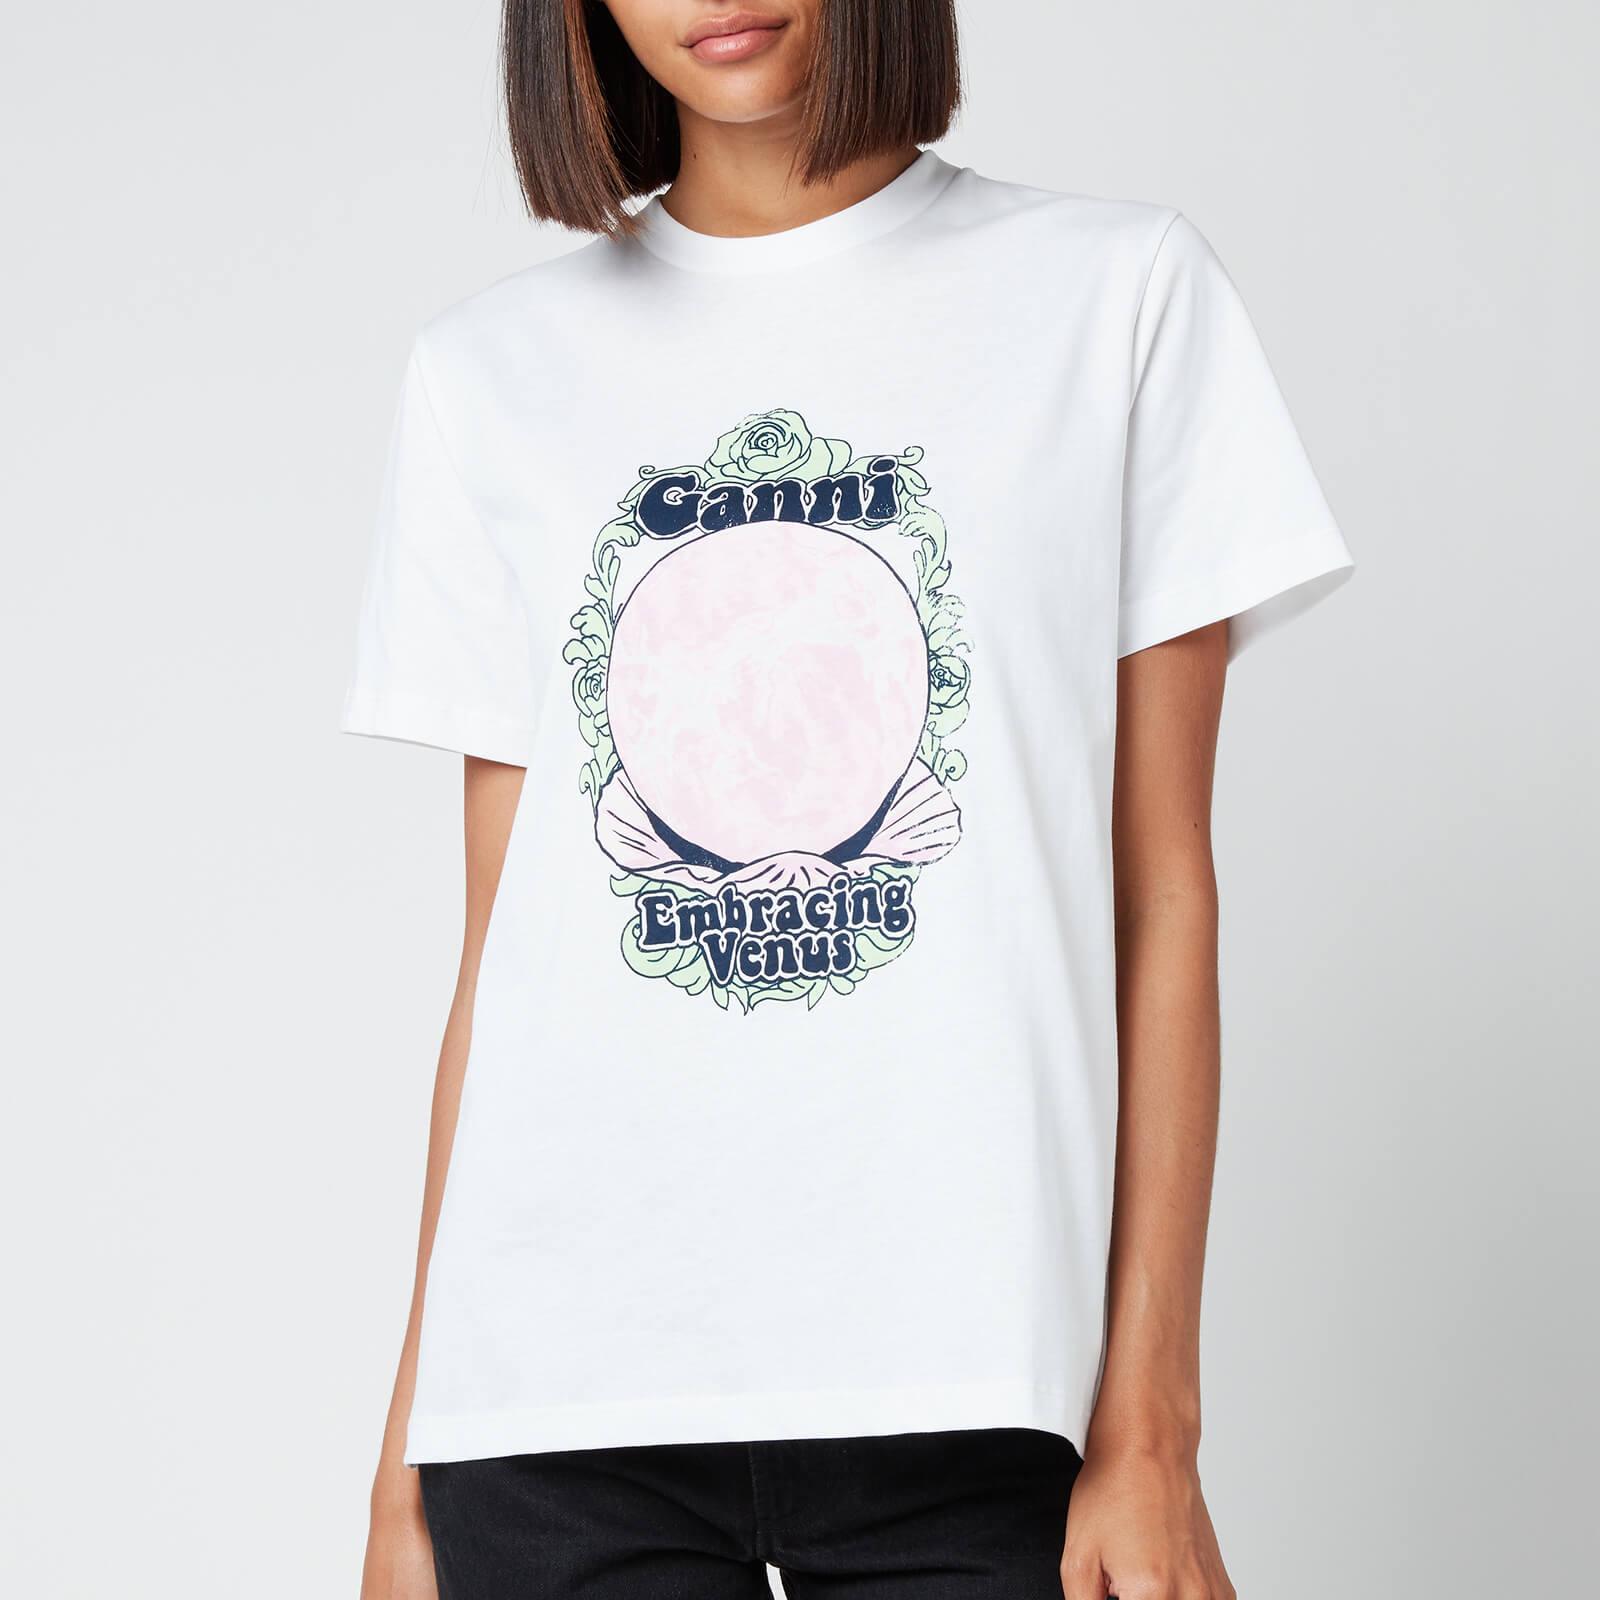 Ganni T-Shirt